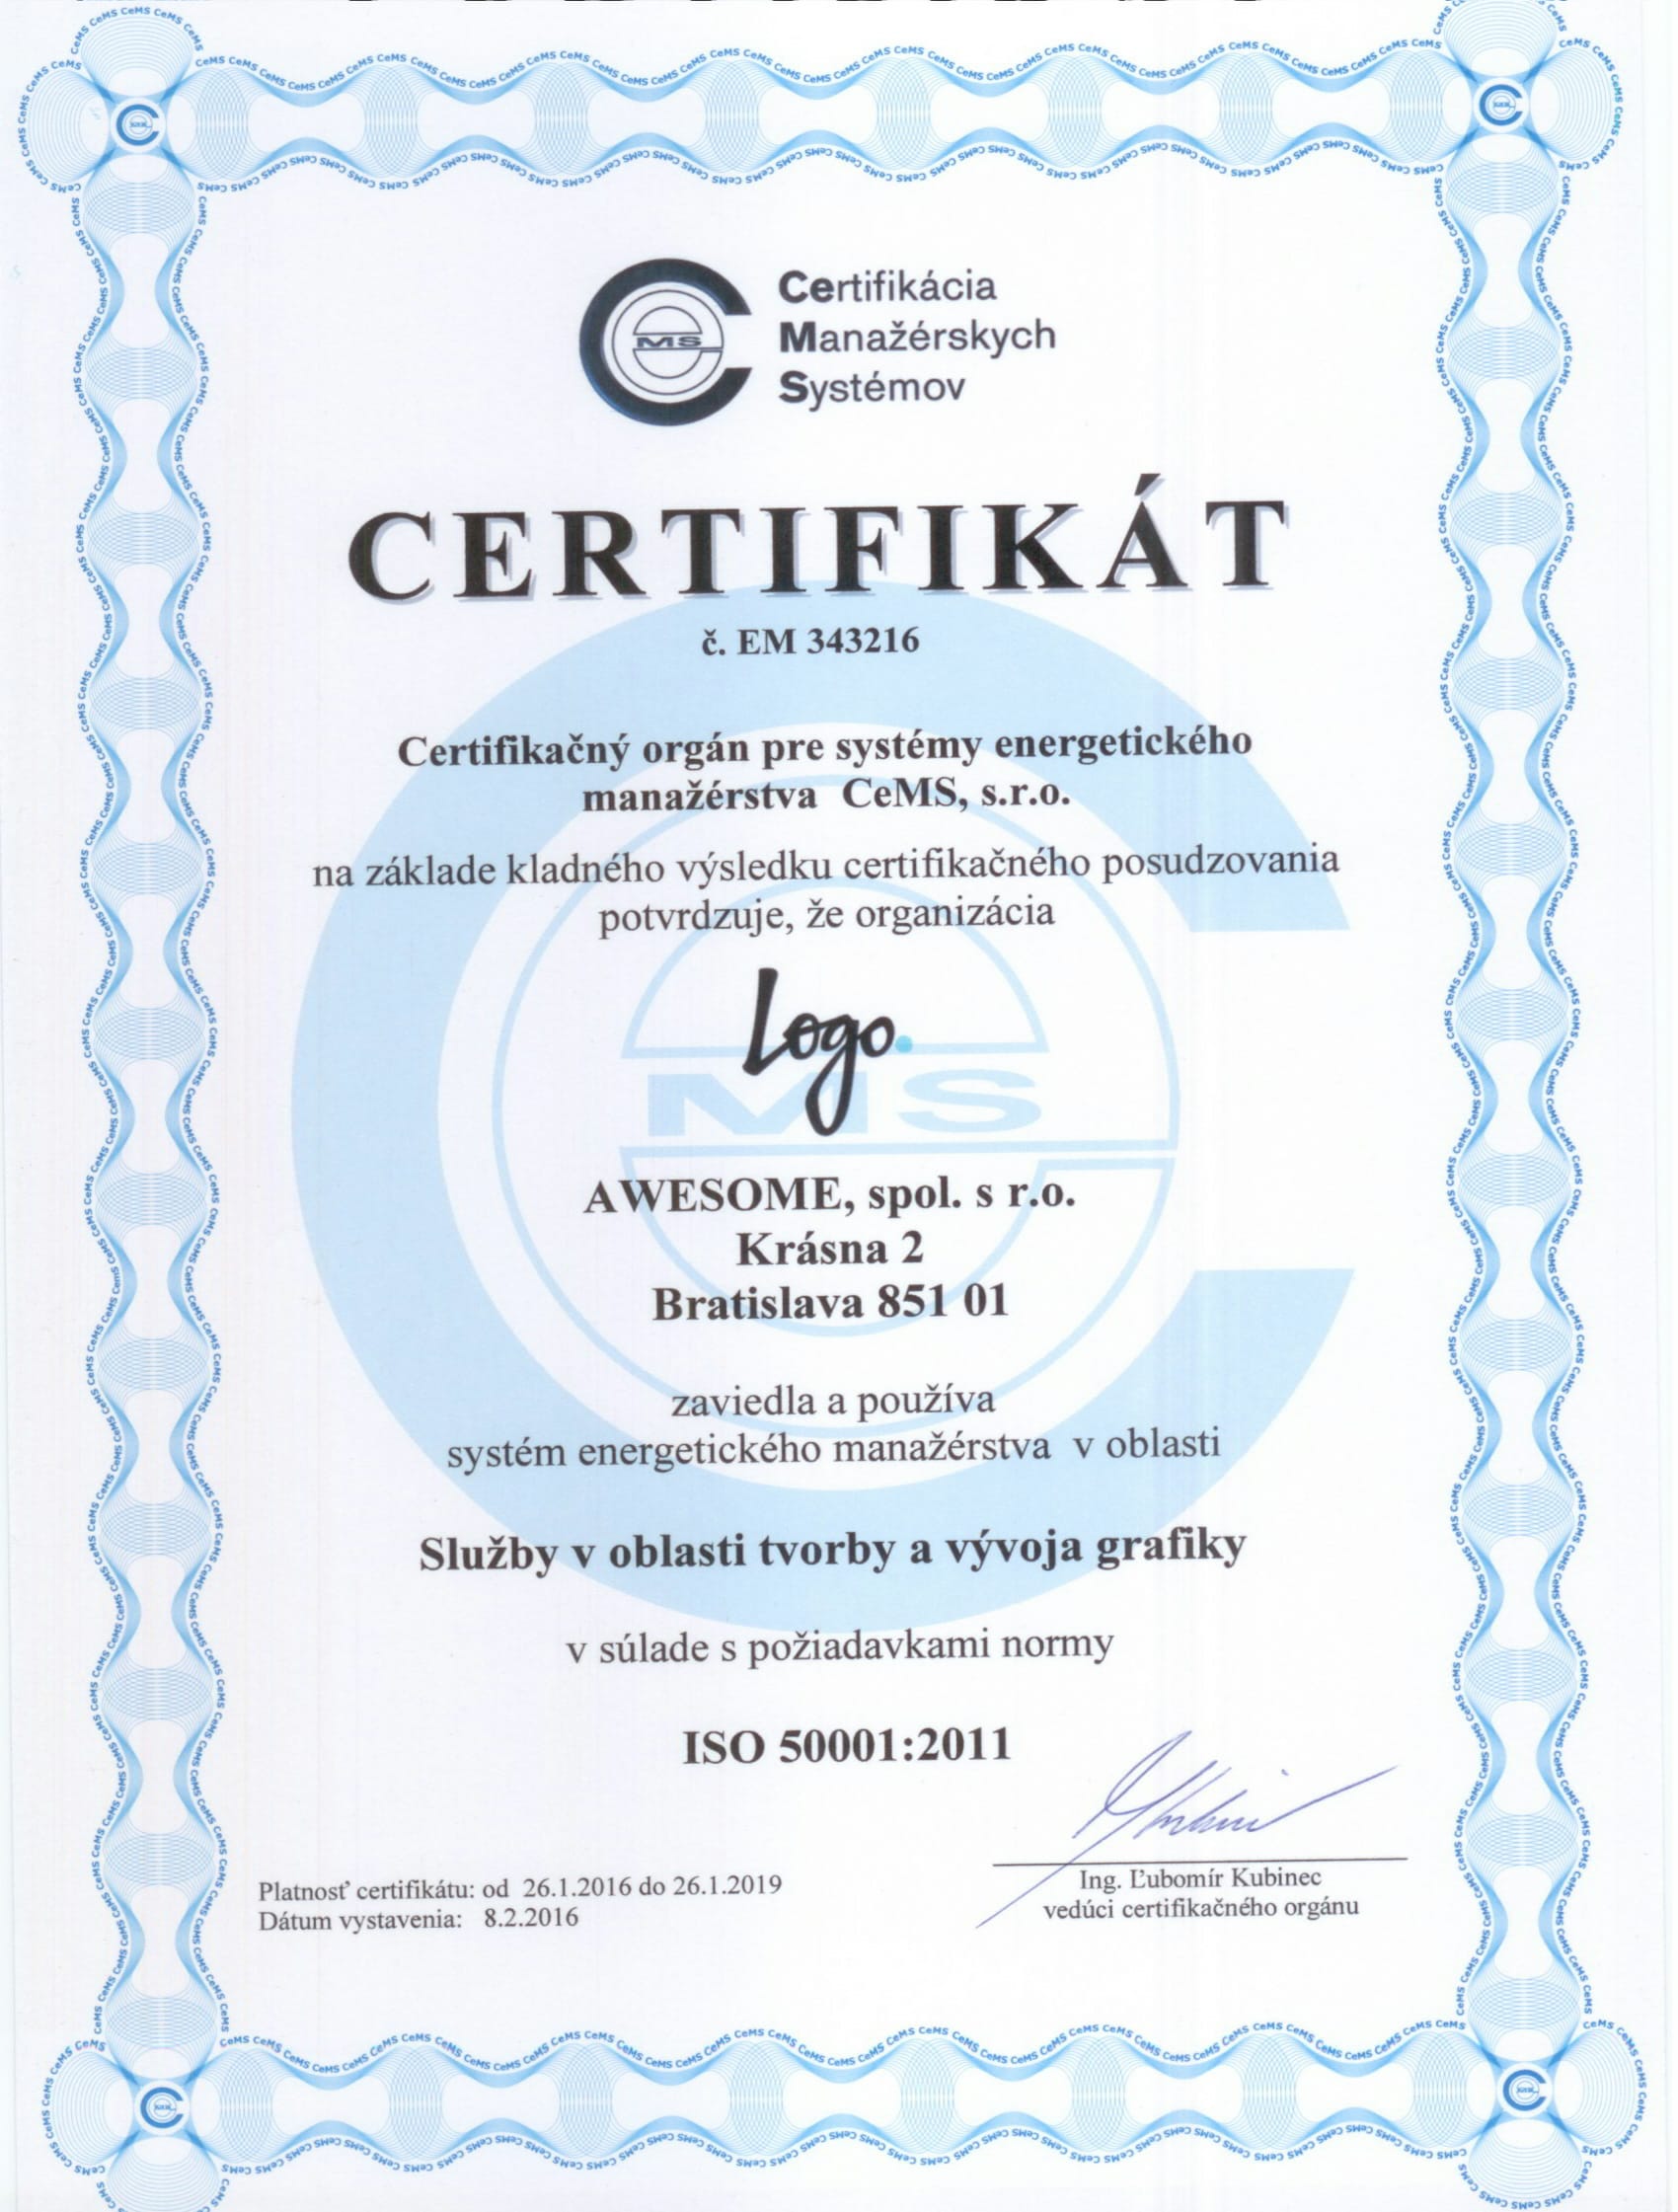 vzor certifikátu ISO 50001 od CeMS